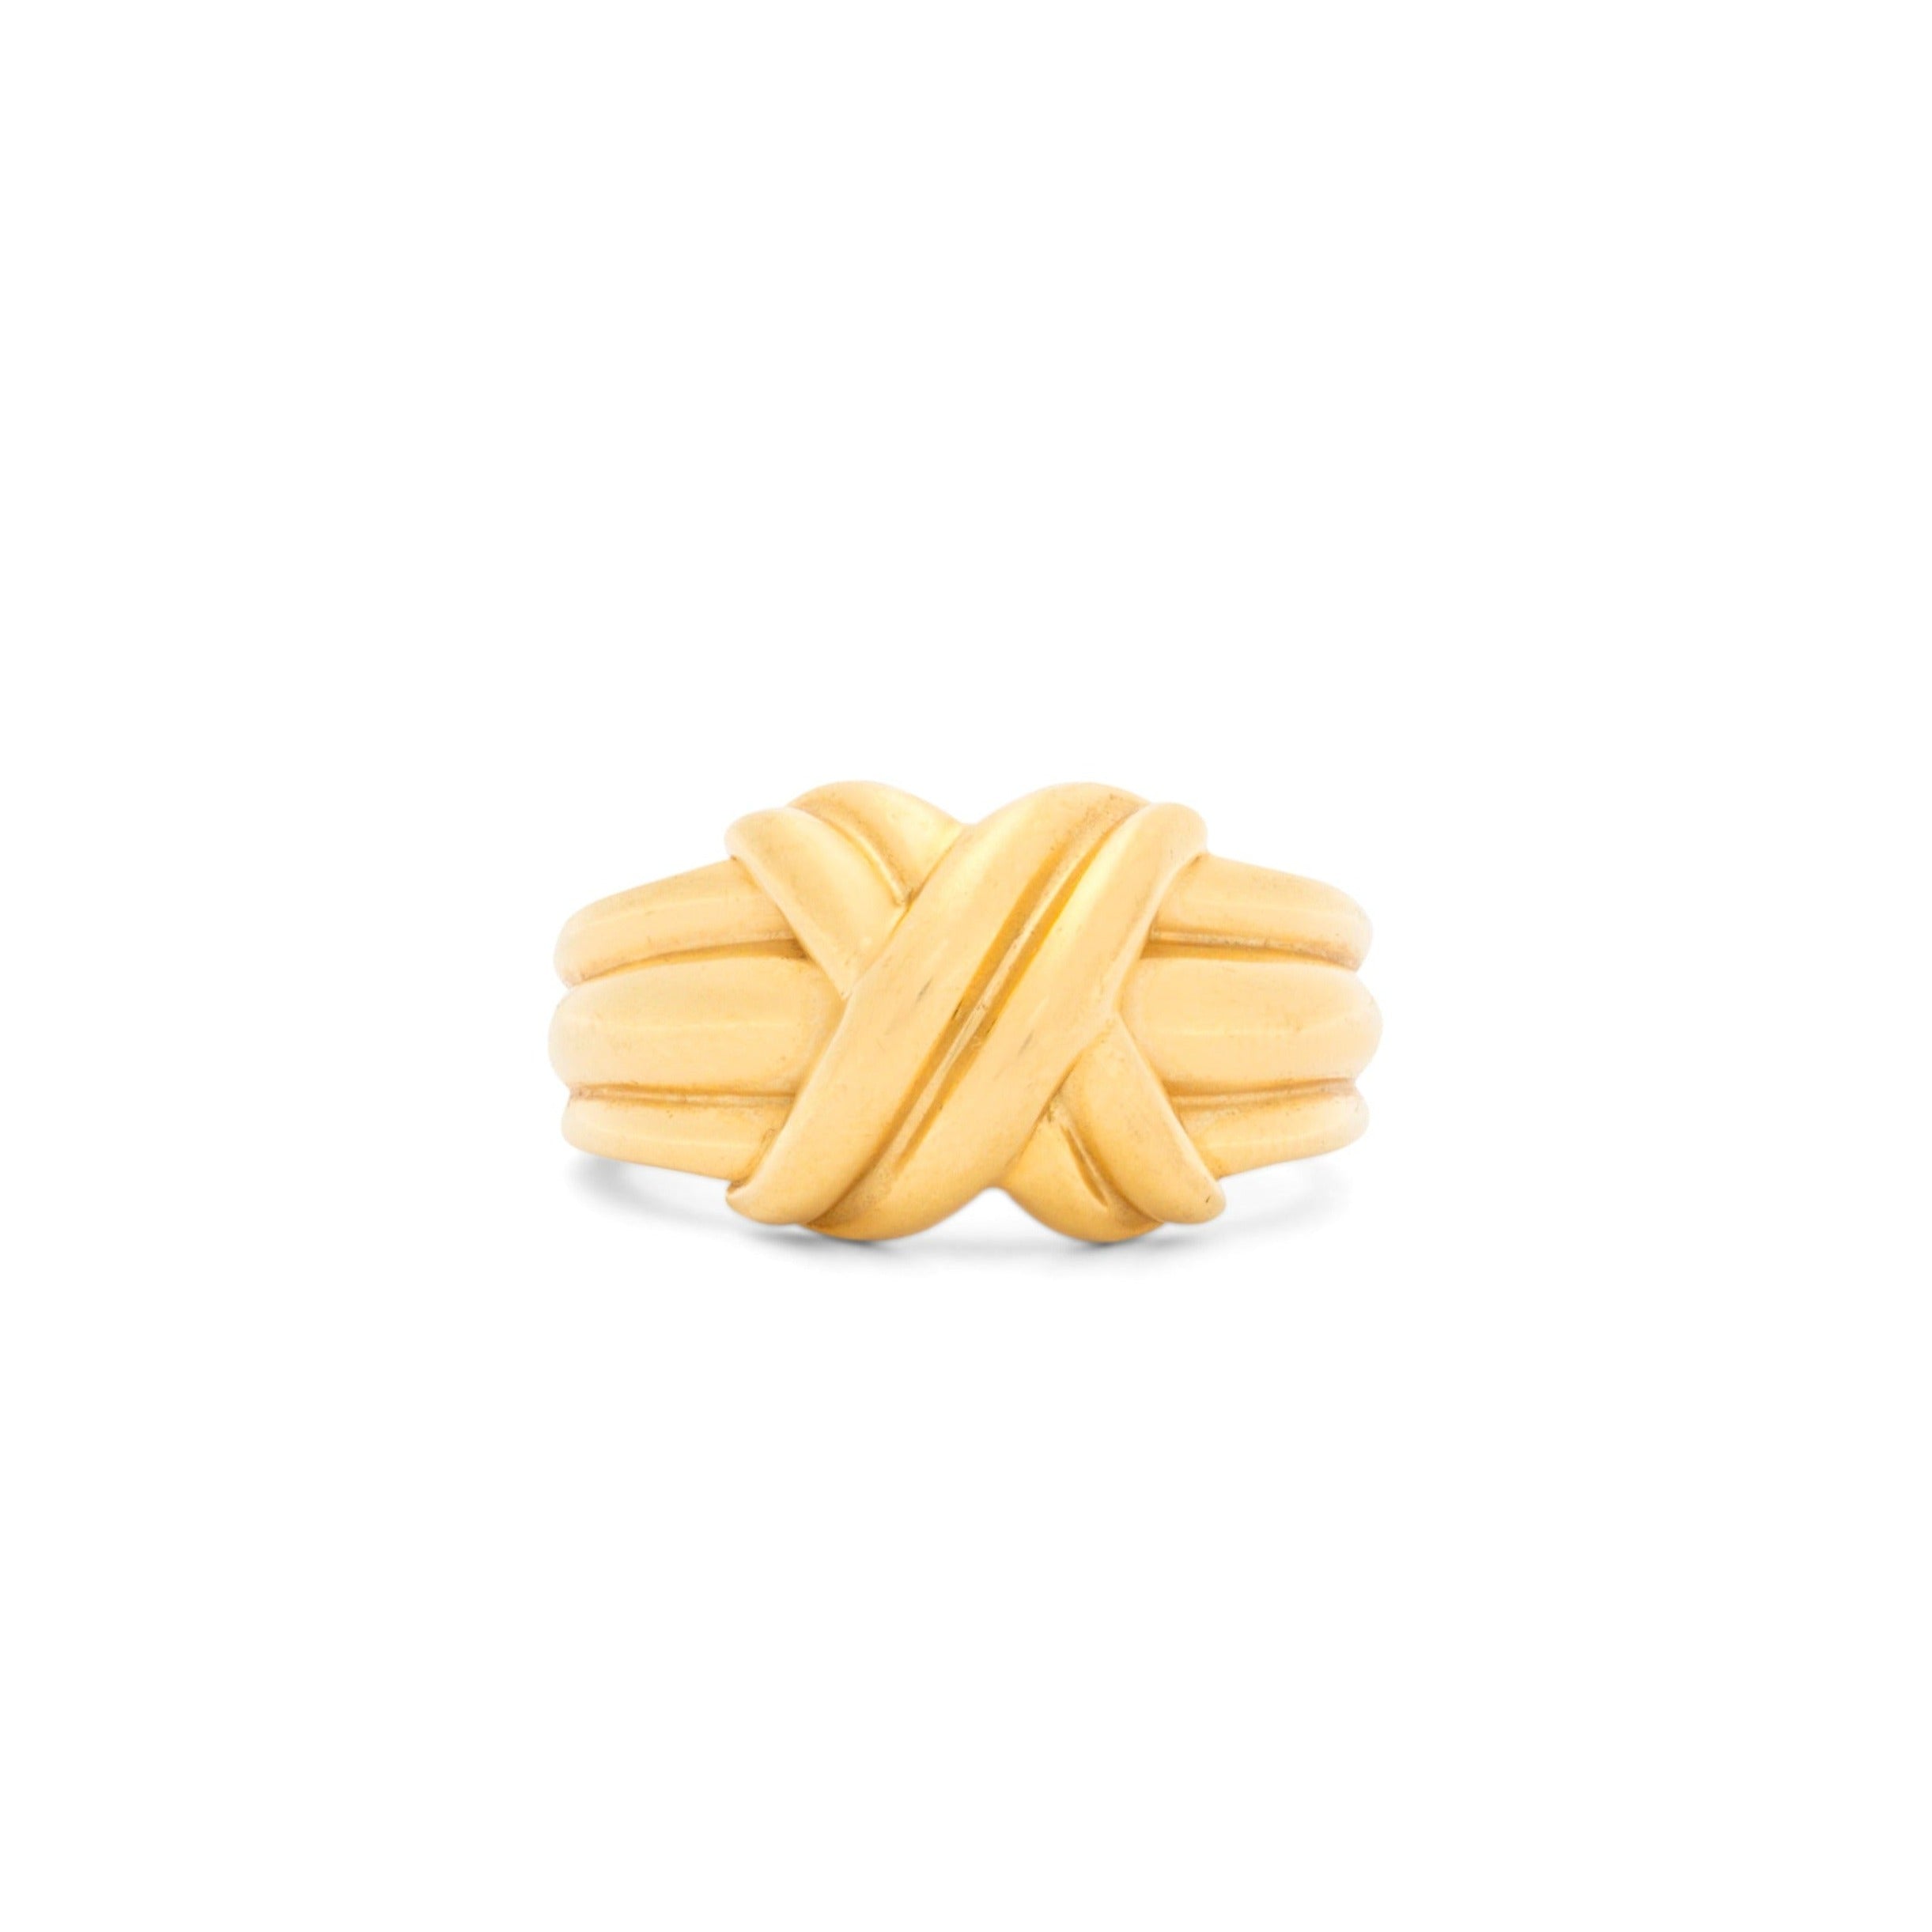 Tiffany & Co 18k Gold X Ring